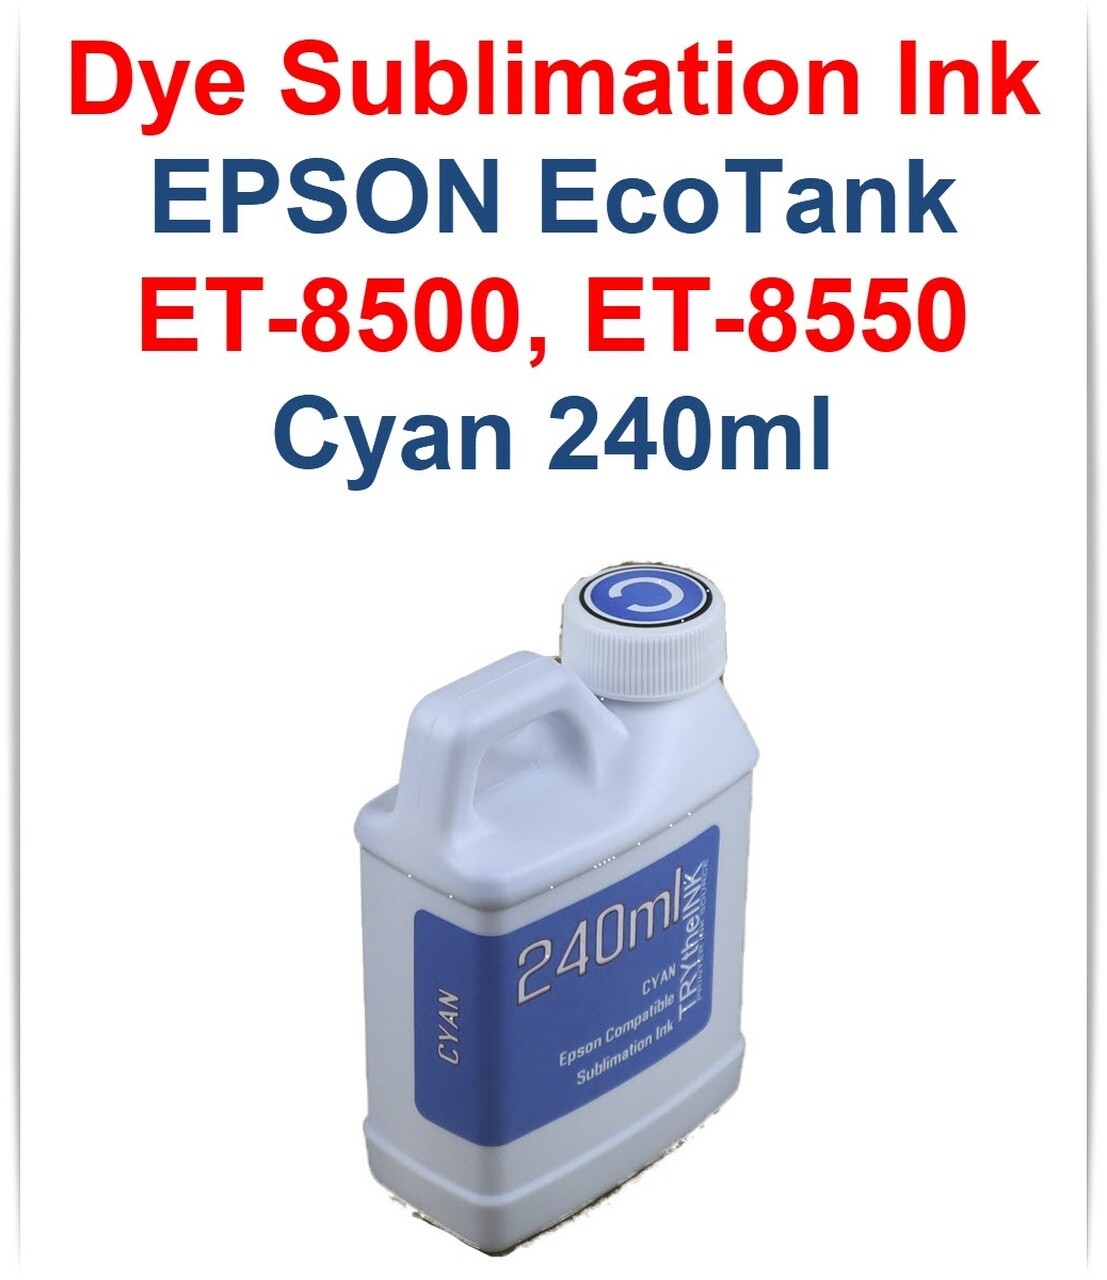 Cyan Dye Sublimation Ink 240ml bottle for EPSON EcoTank ET-8500 ET-8550 printers